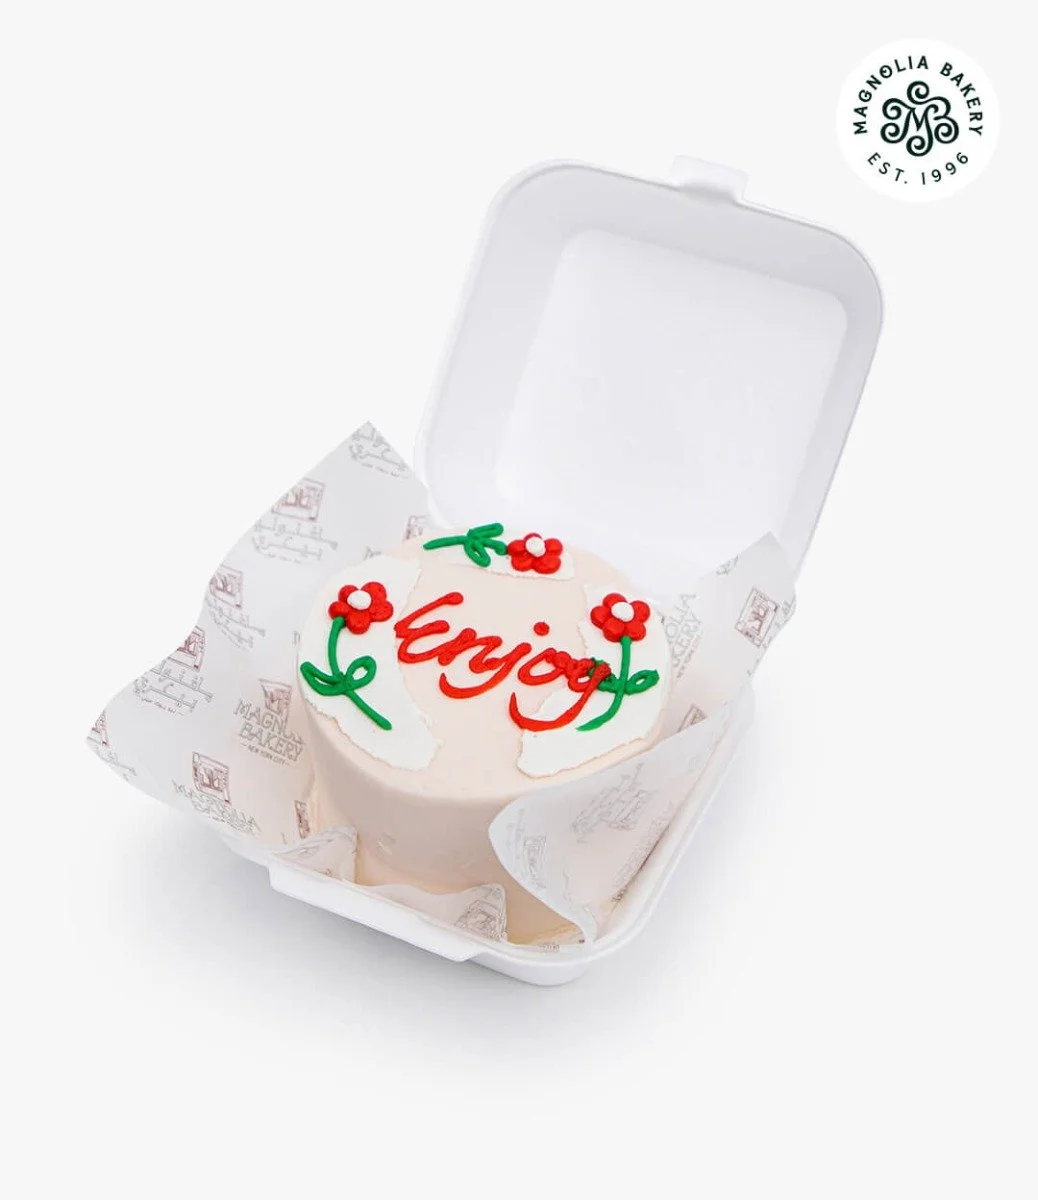 Enjoy Lunch Box Cake By Magnolia